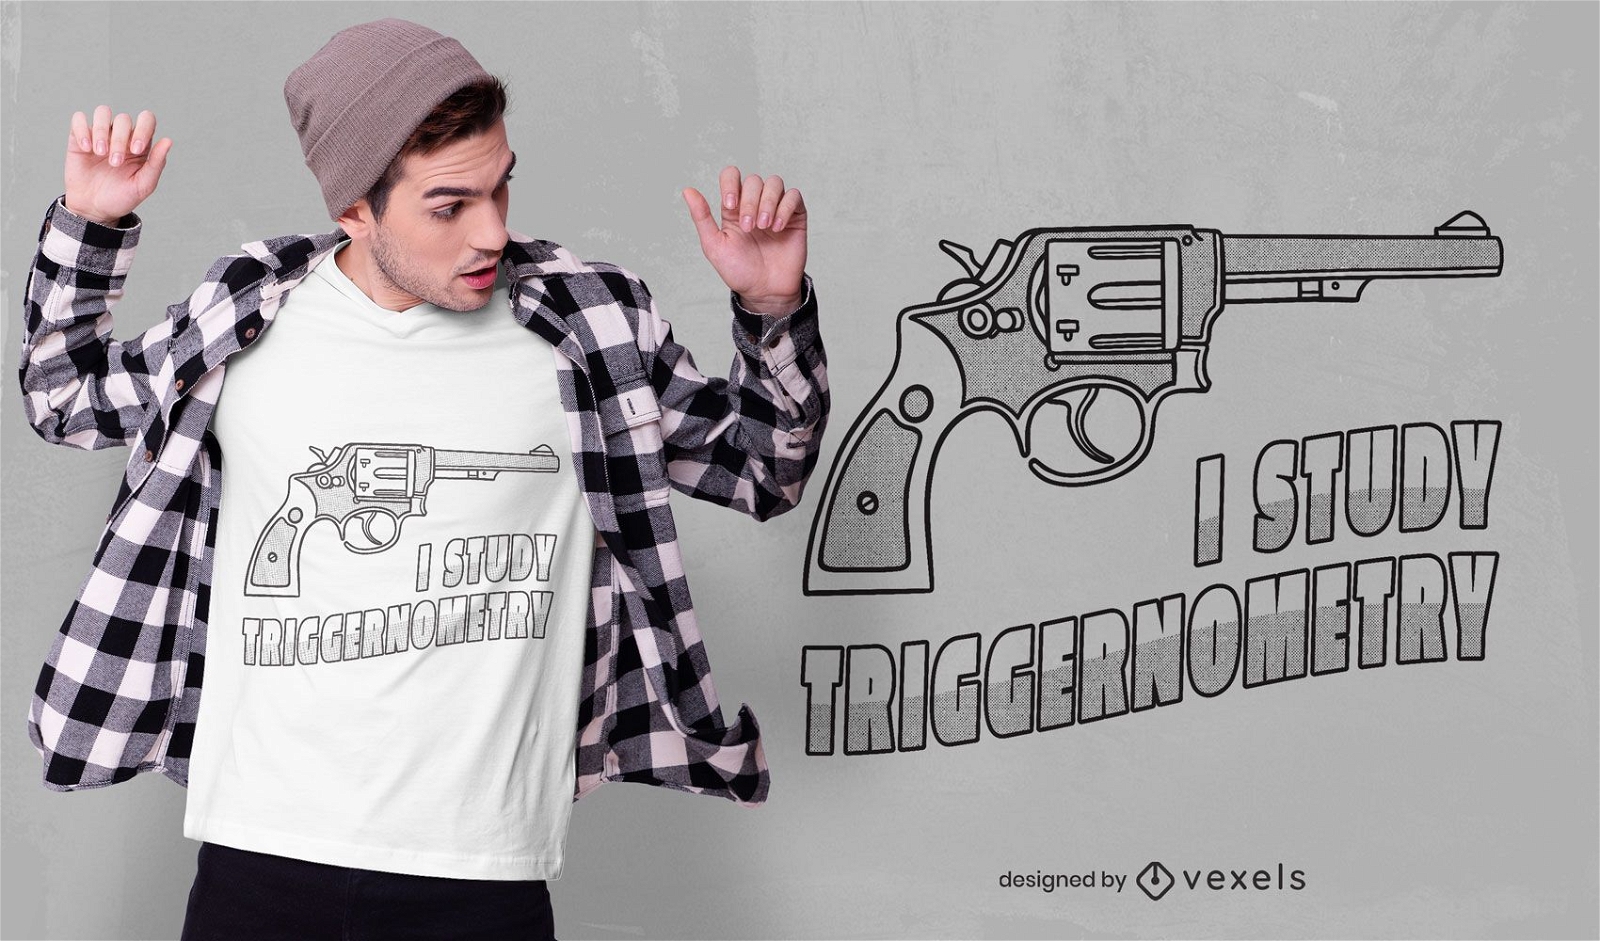 Triggernometry t-shirt design